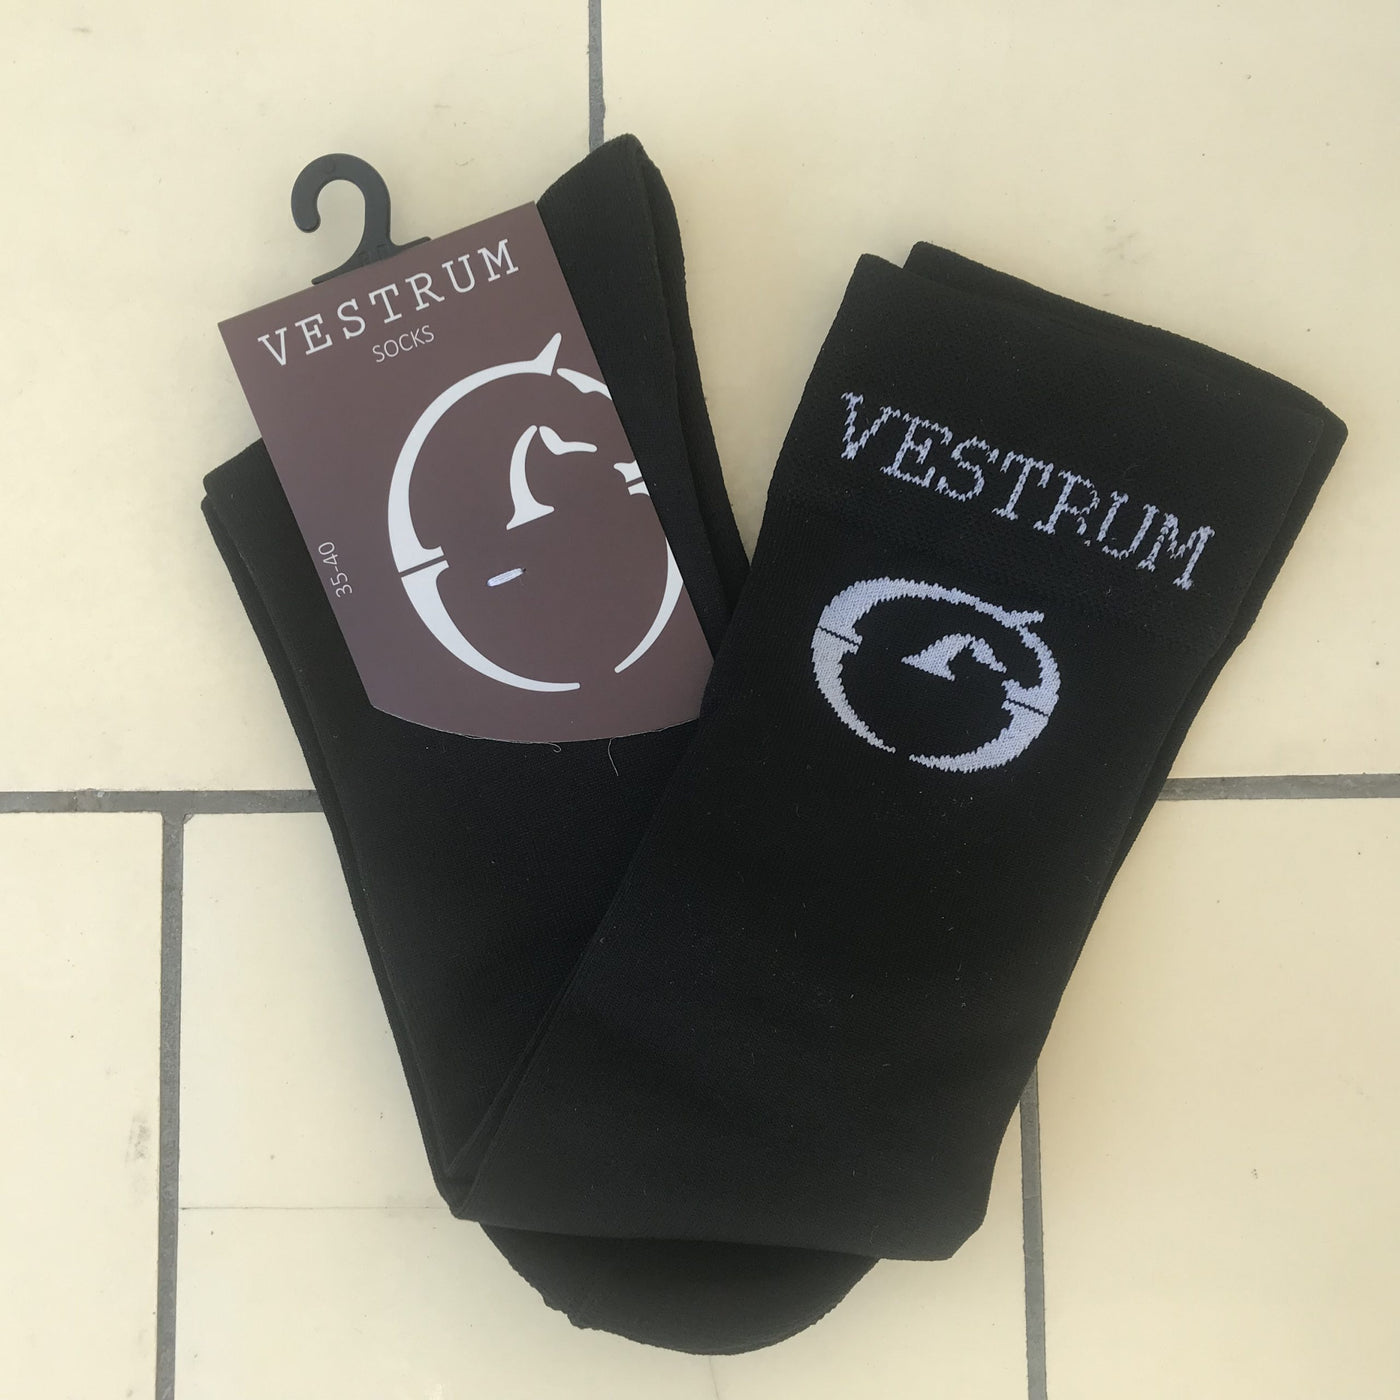 Vestrum Villusimius Socks